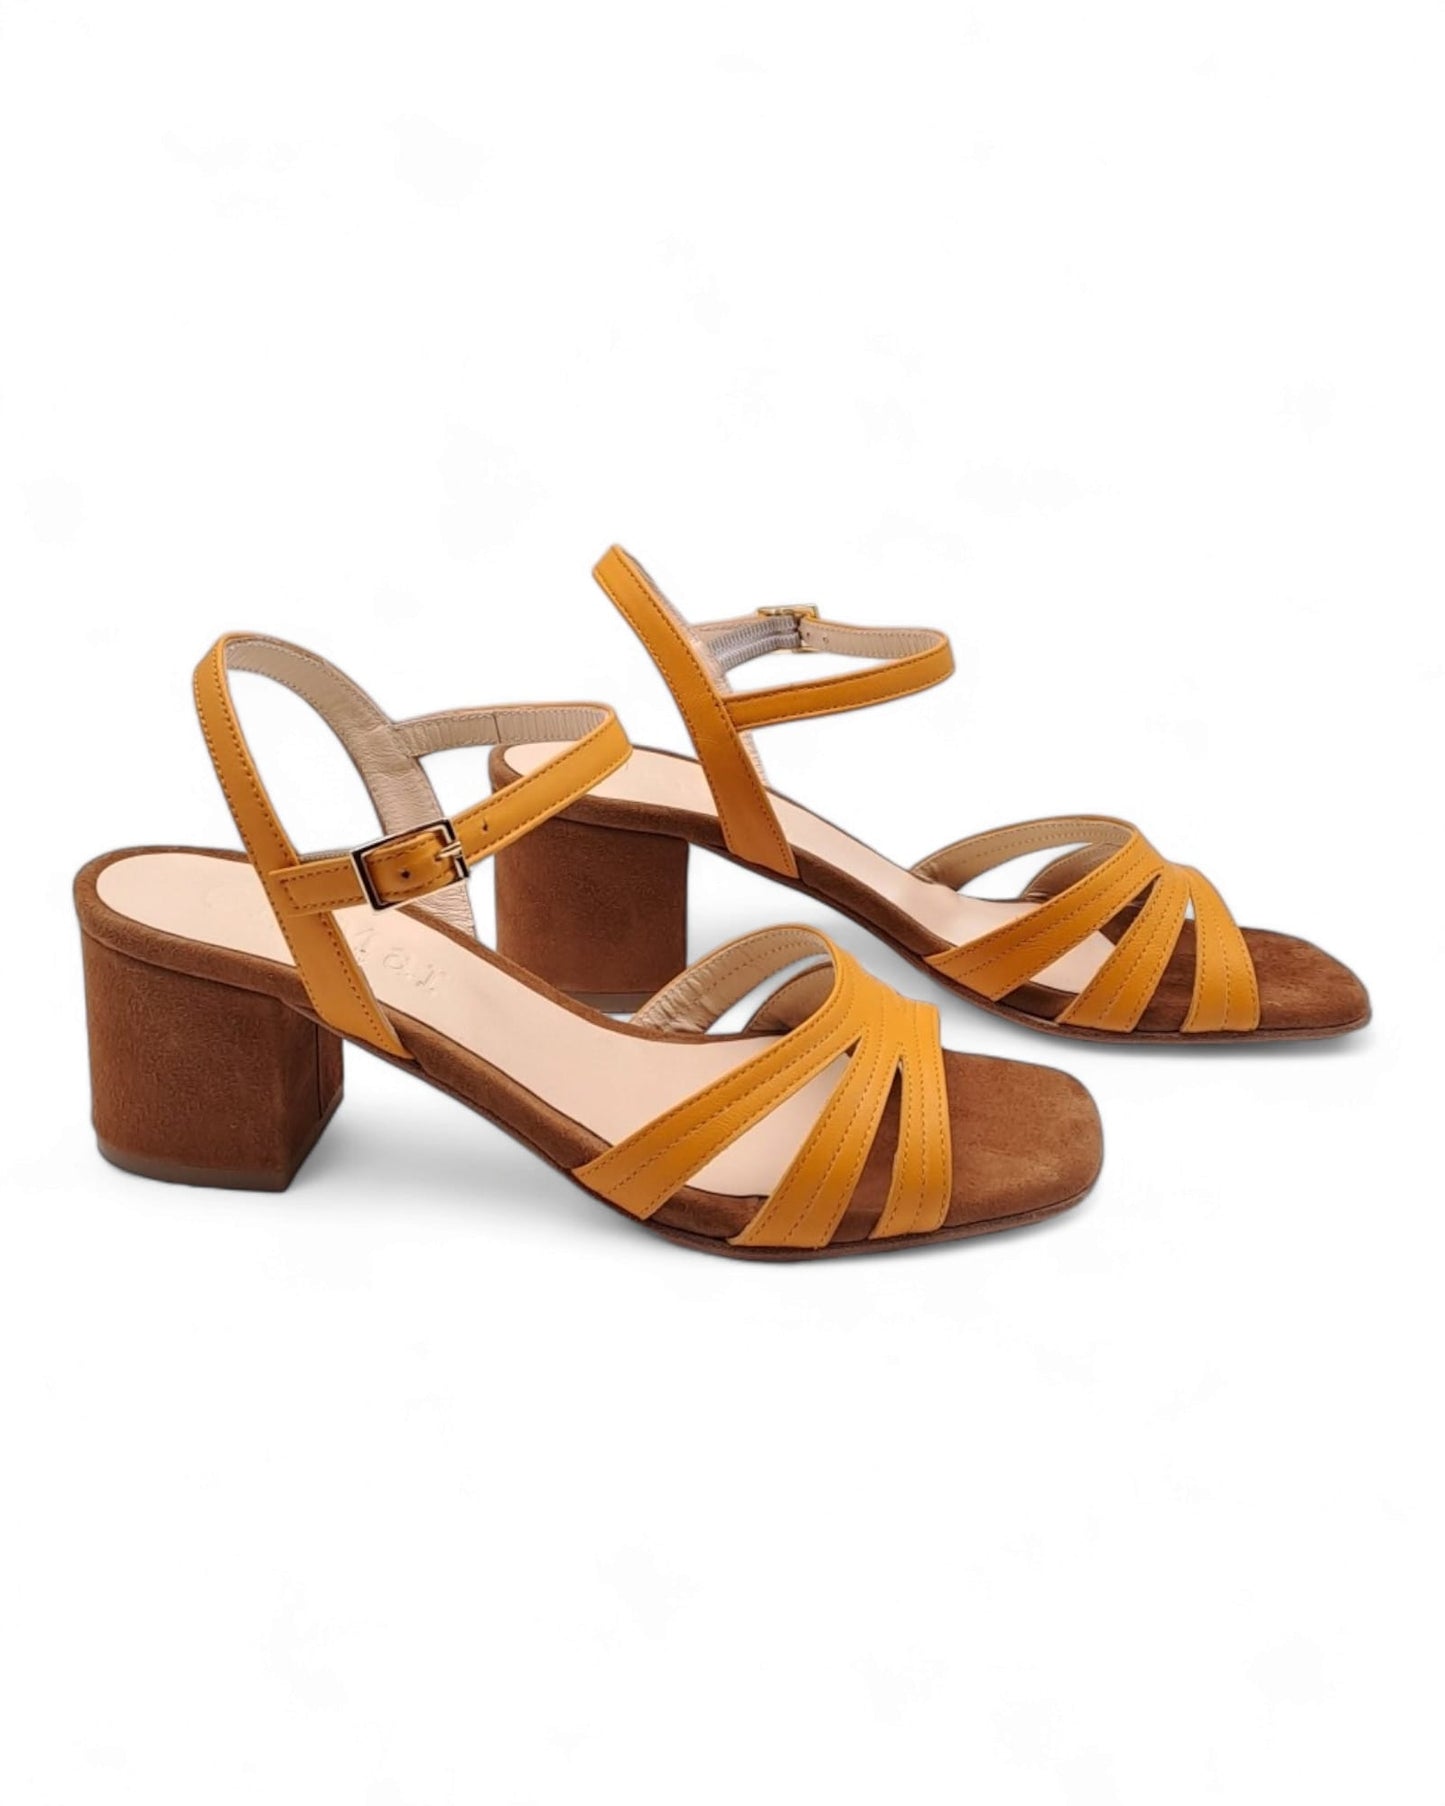 Emma Nappa Pumpkin/turmeric suede sandal